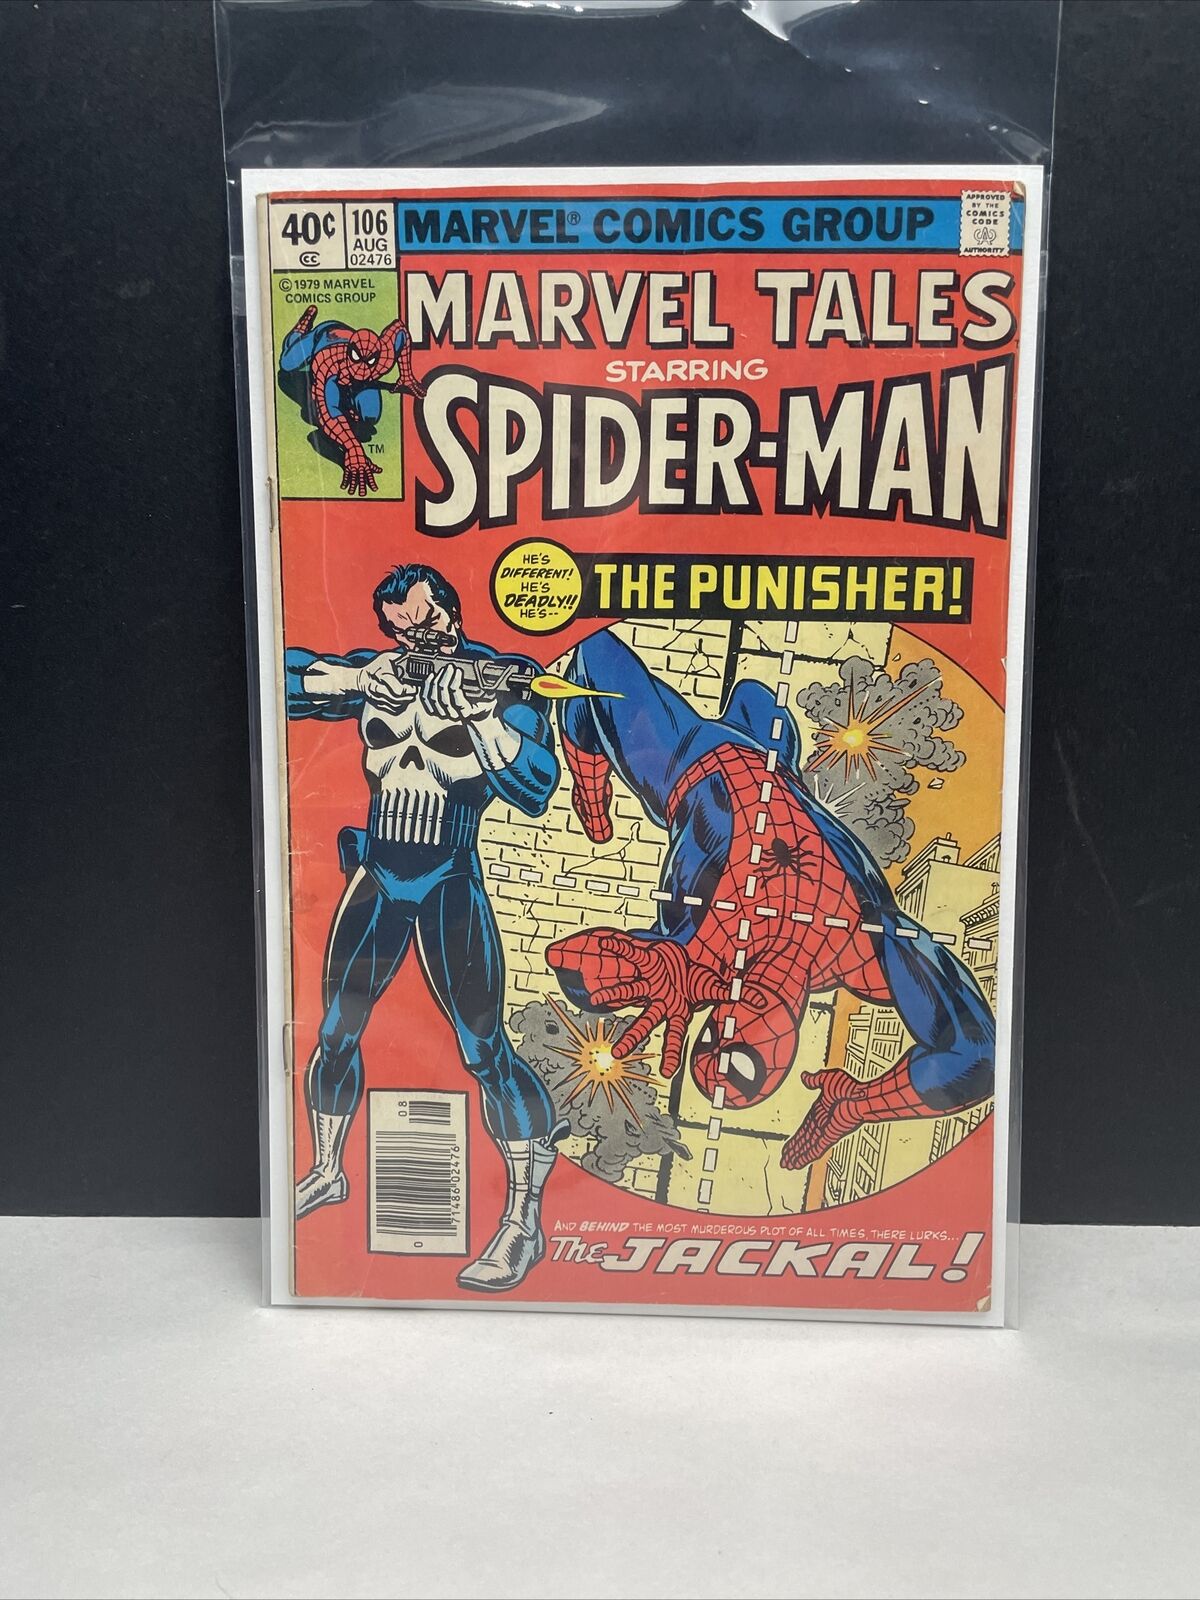 Marvel Tales #106 (1979) Spider-Man & Punisher